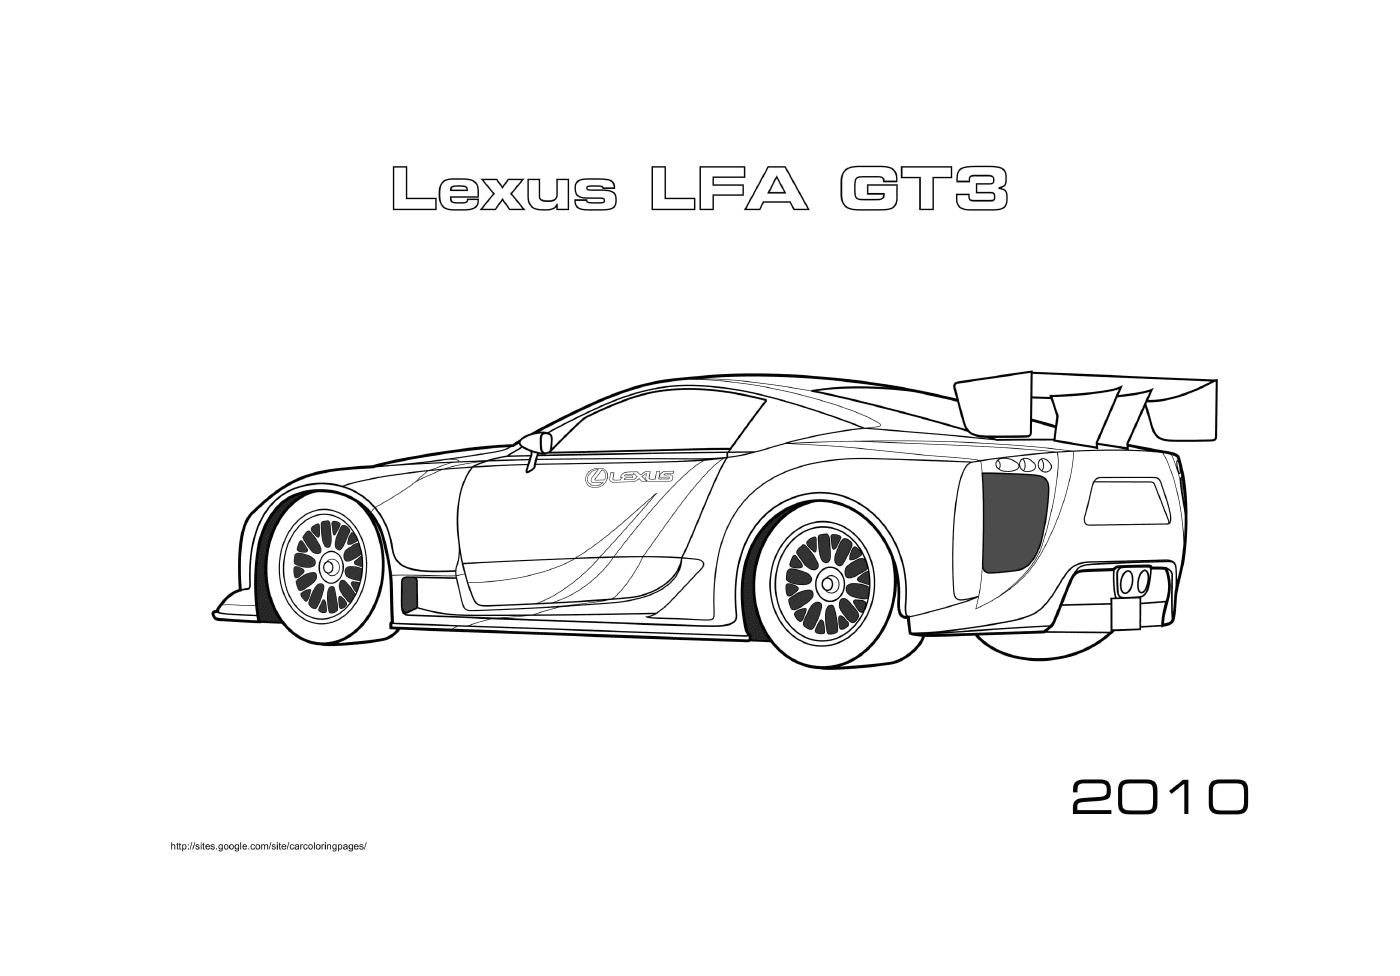  Lexus LFA GT3 racing car 